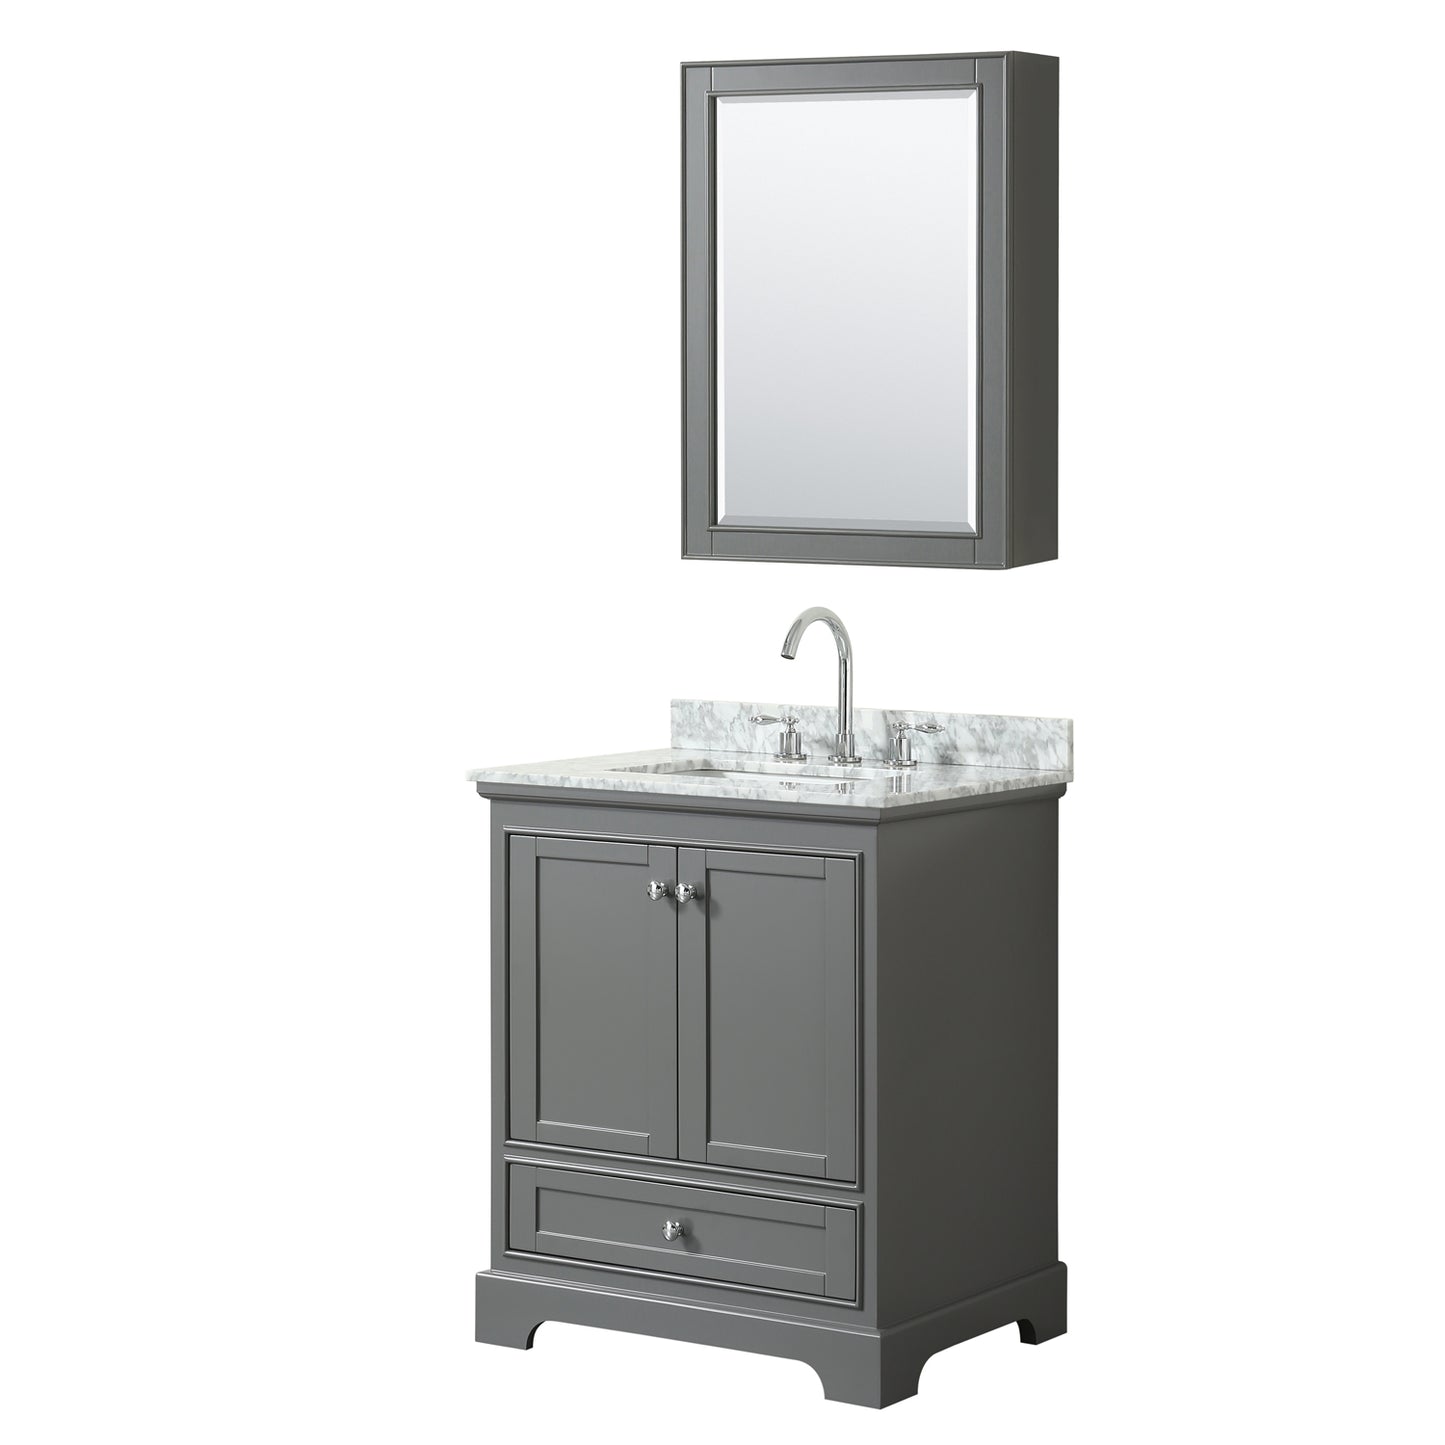 30 Inch Single Bathroom Vanity, White Carrara Marble Countertop, Undermount Square Sink, and Medicine Cabinet - Luxe Bathroom Vanities Luxury Bathroom Fixtures Bathroom Furniture